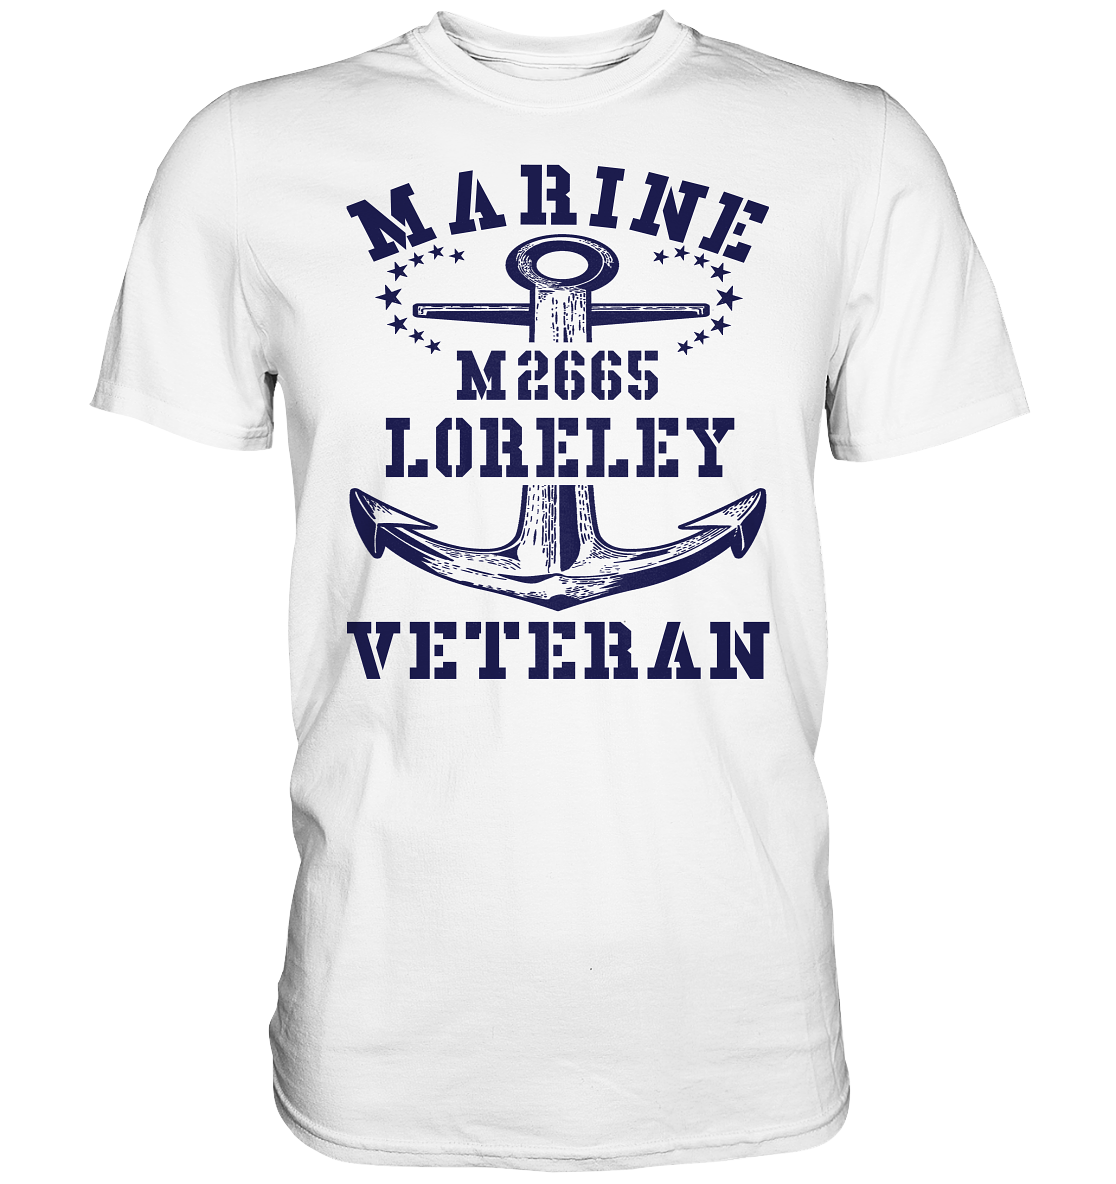 BiMi M2665 LORELEY Marine Veteran - Premium Shirt